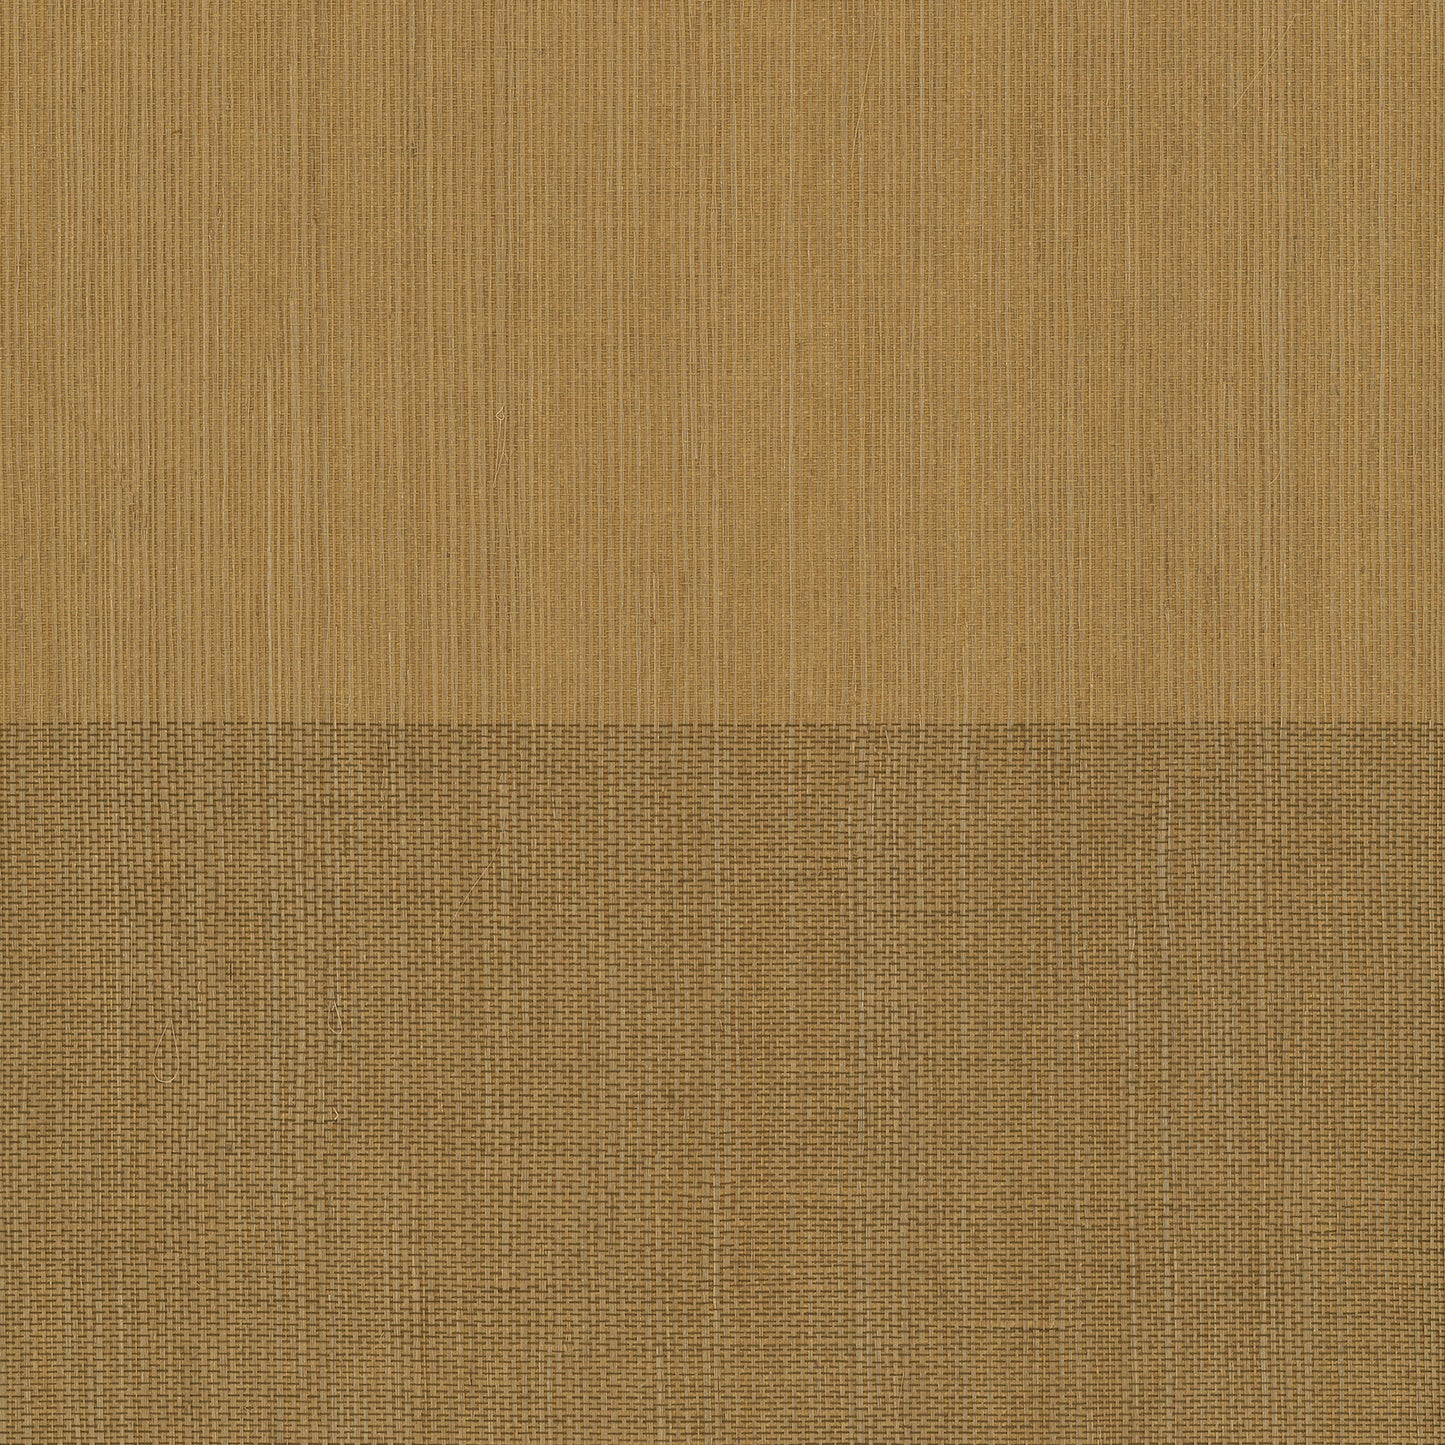 Order 4018-0027 Grasscloth Portfolio Yue Ying Light Brown Grasscloth Brown by Advantage